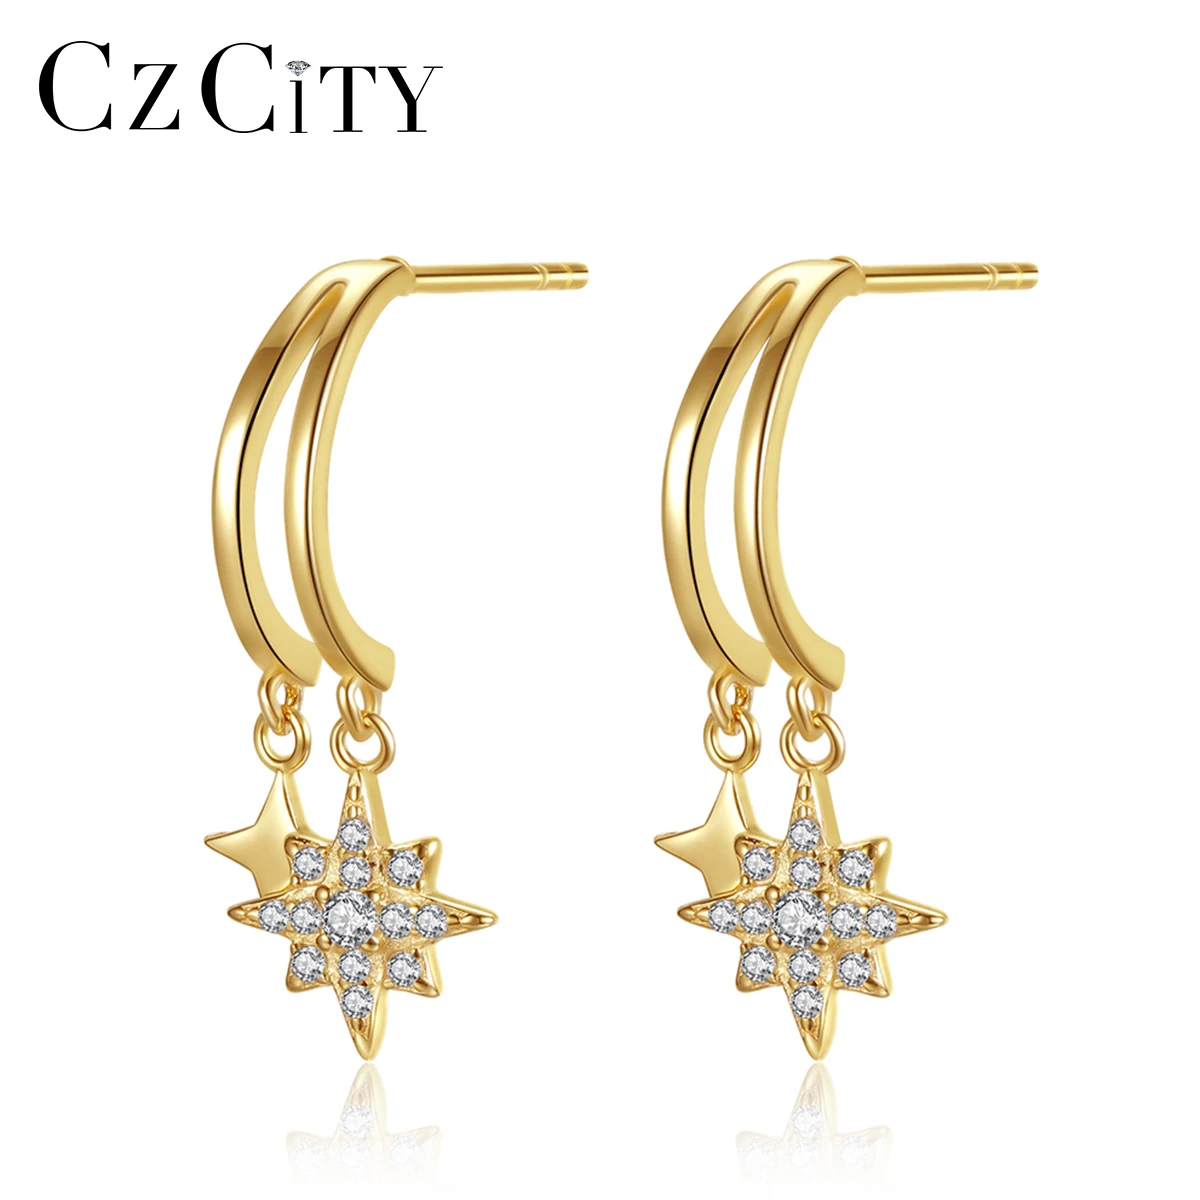 

CZCITY Sparkling Stars Certified Original 925 Silver Drop Earrings for Women Gold Color CZ Korean Fashion Women Accessories